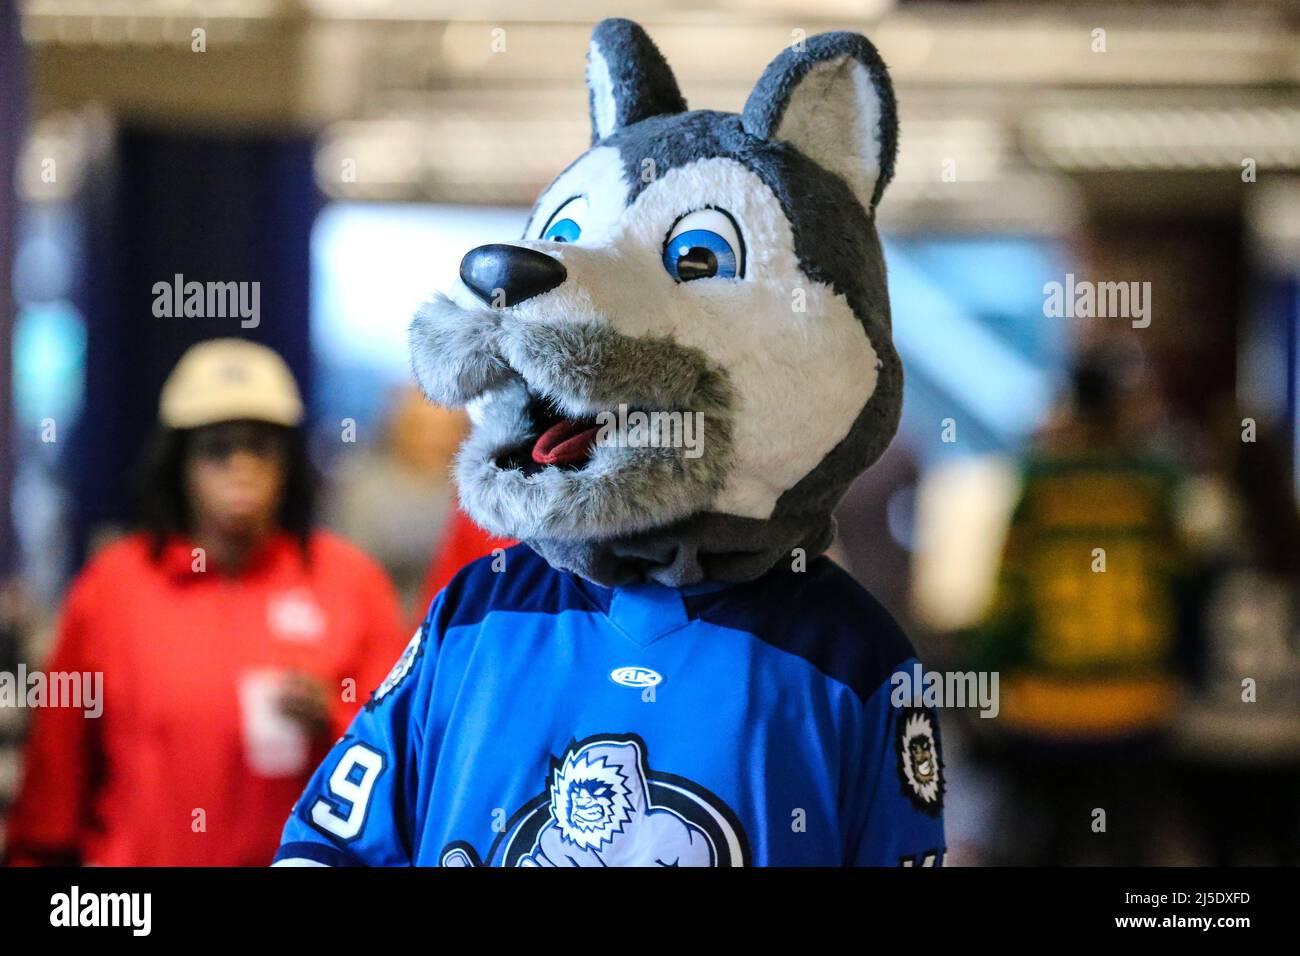 2022-23 Jacksonville Icemen (ECHL) Fang (mascot)